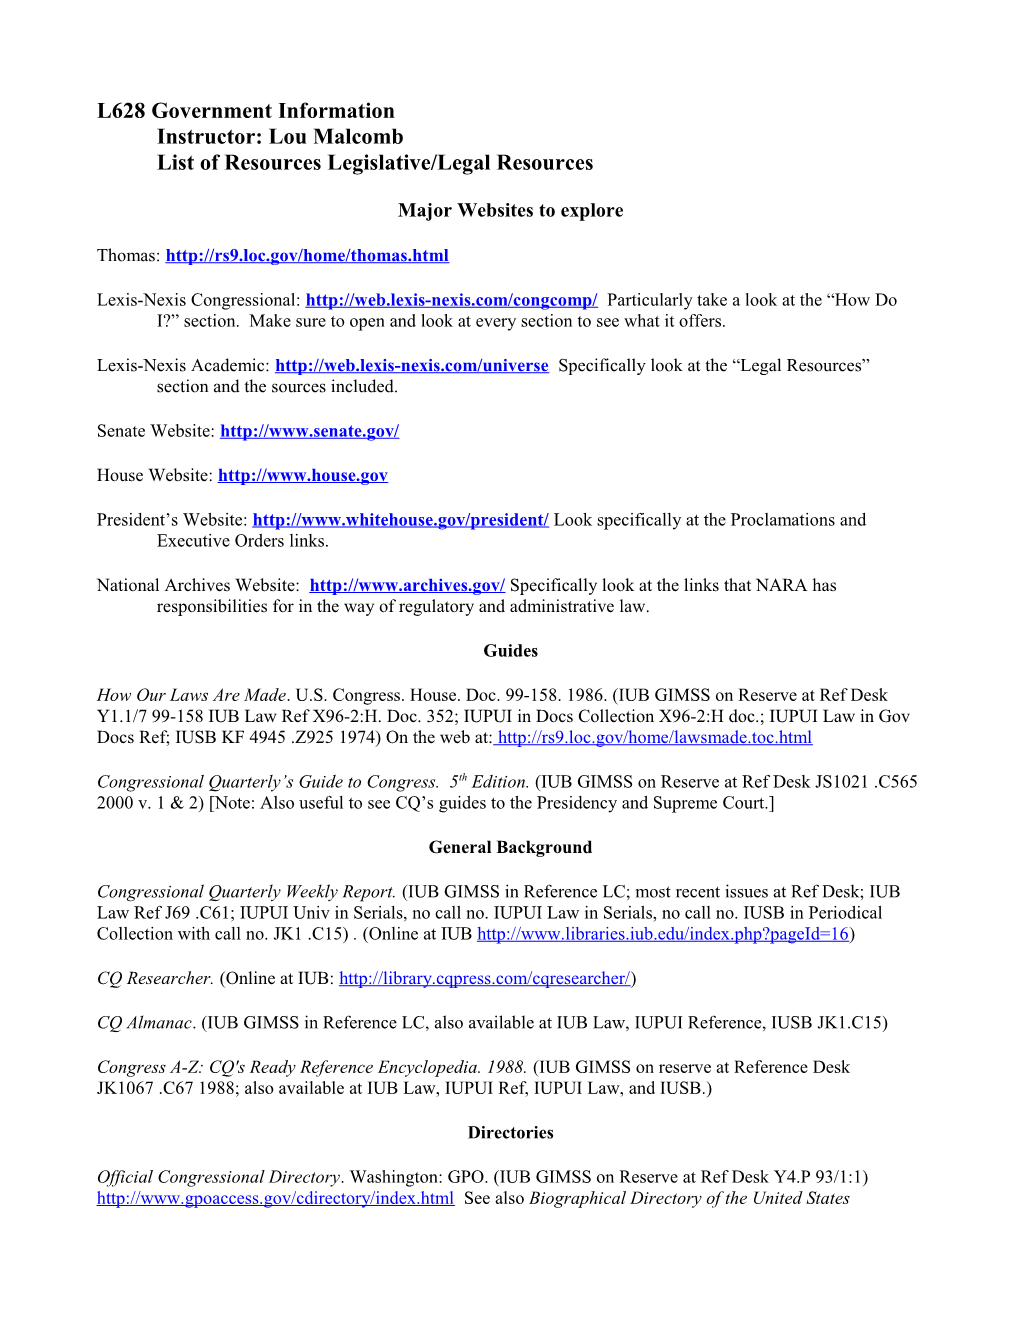 L628 Government Informationinstructor: Lou Malcomblist of Resources Legislative/Legal Resources